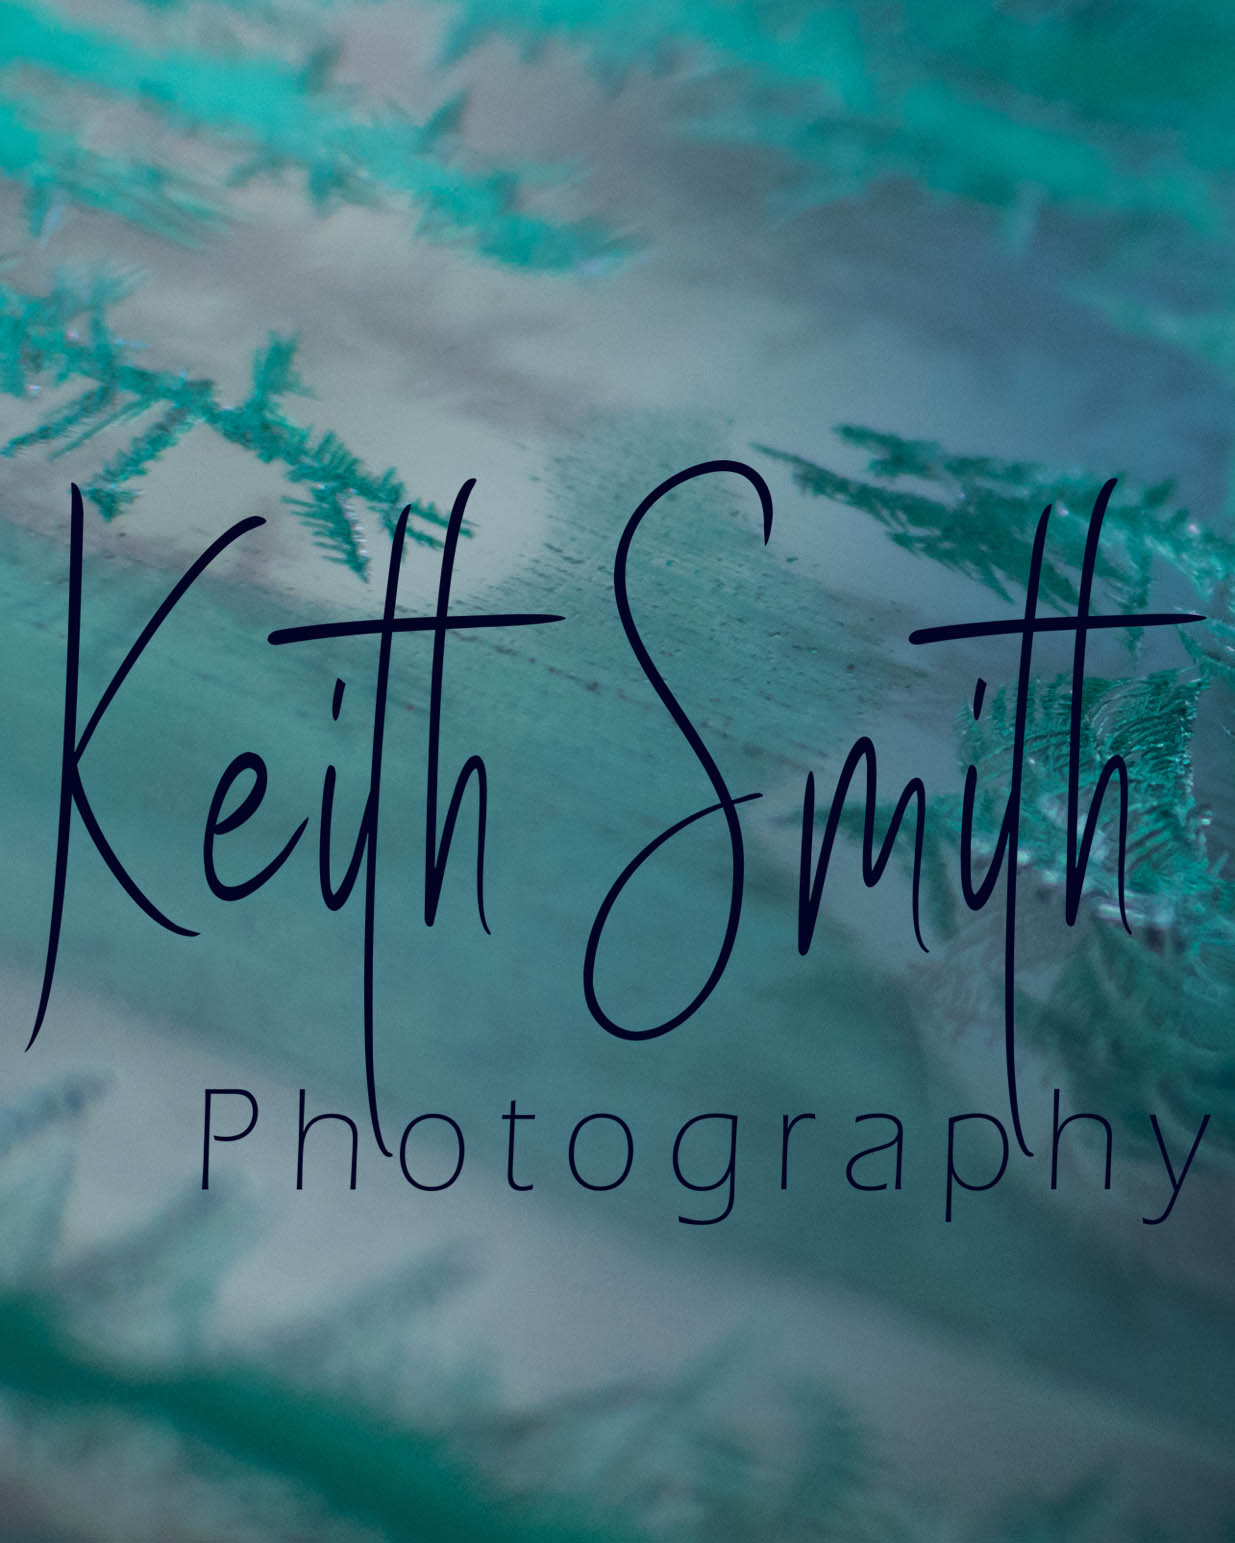 Keith Smith